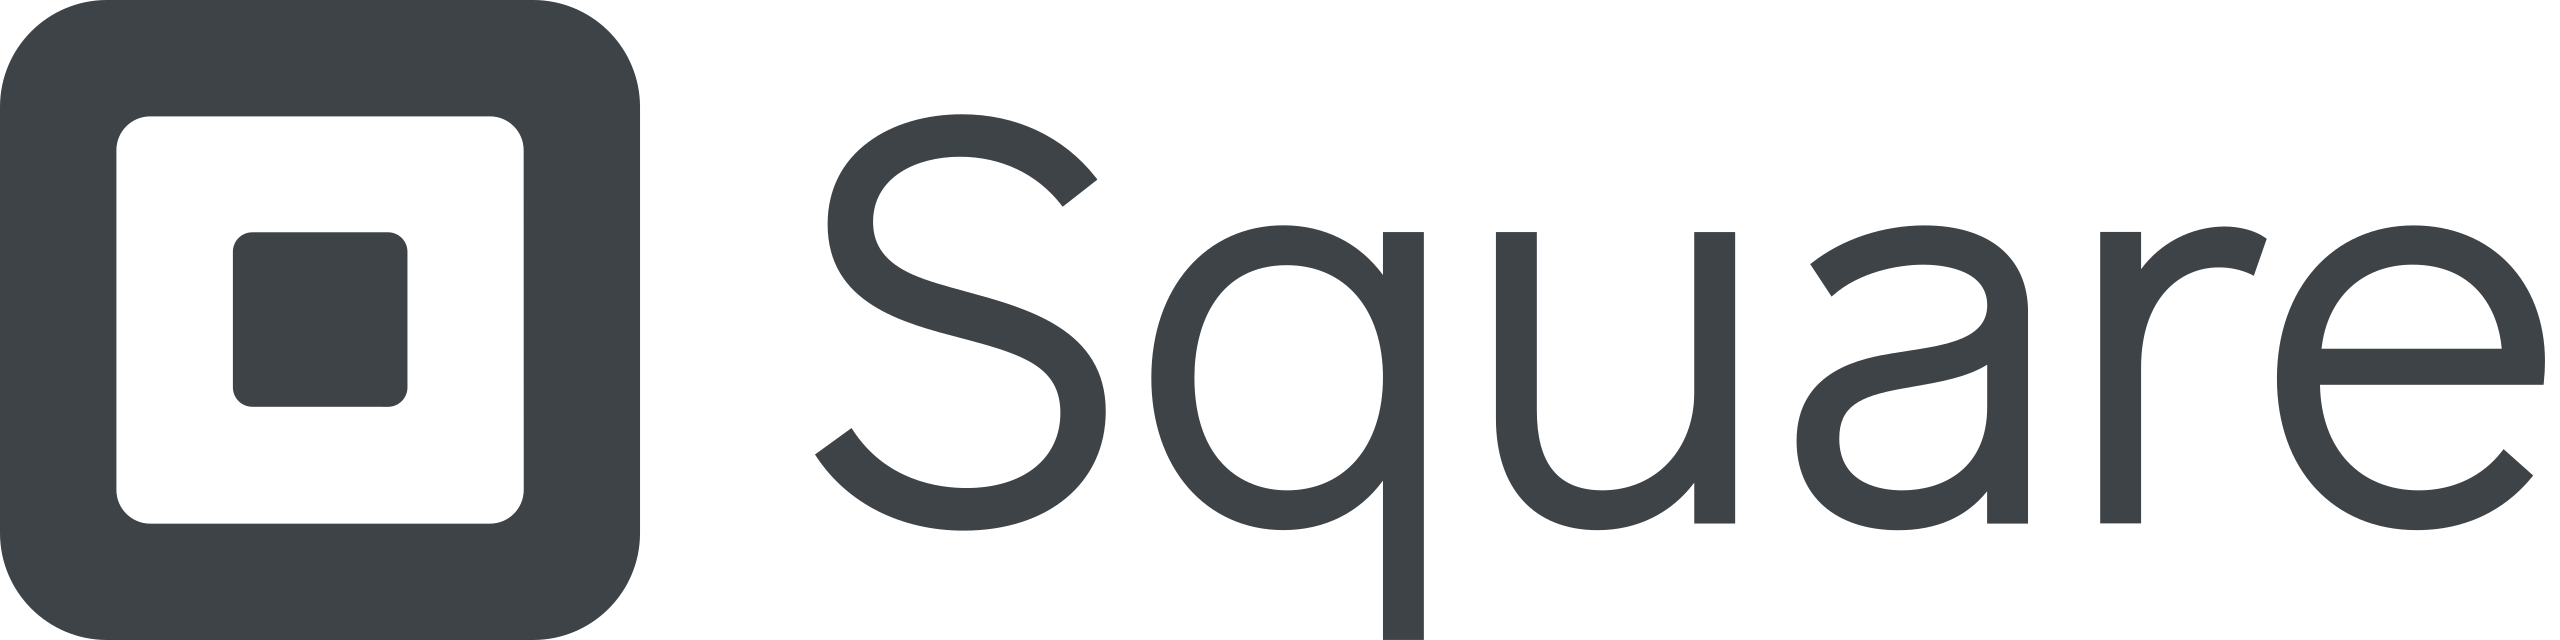 Square incorporated logo